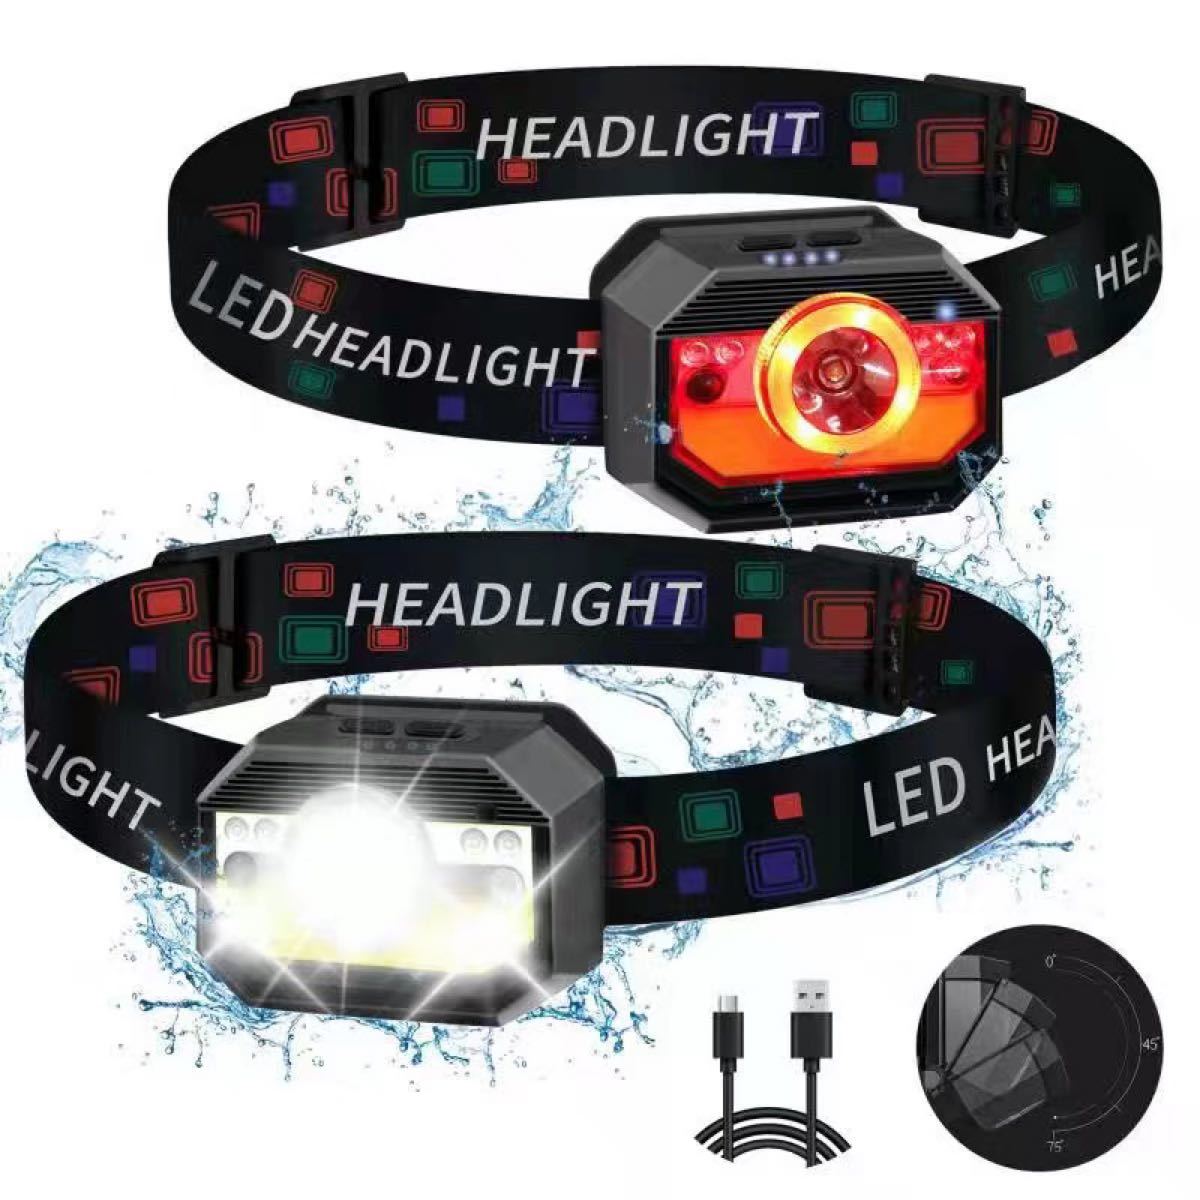 LED ヘッドライト 2個セットセンサー COB USB充電式 9モード 高輝度 生活防水 作業灯 キャンプ散歩登山釣りアウトドア